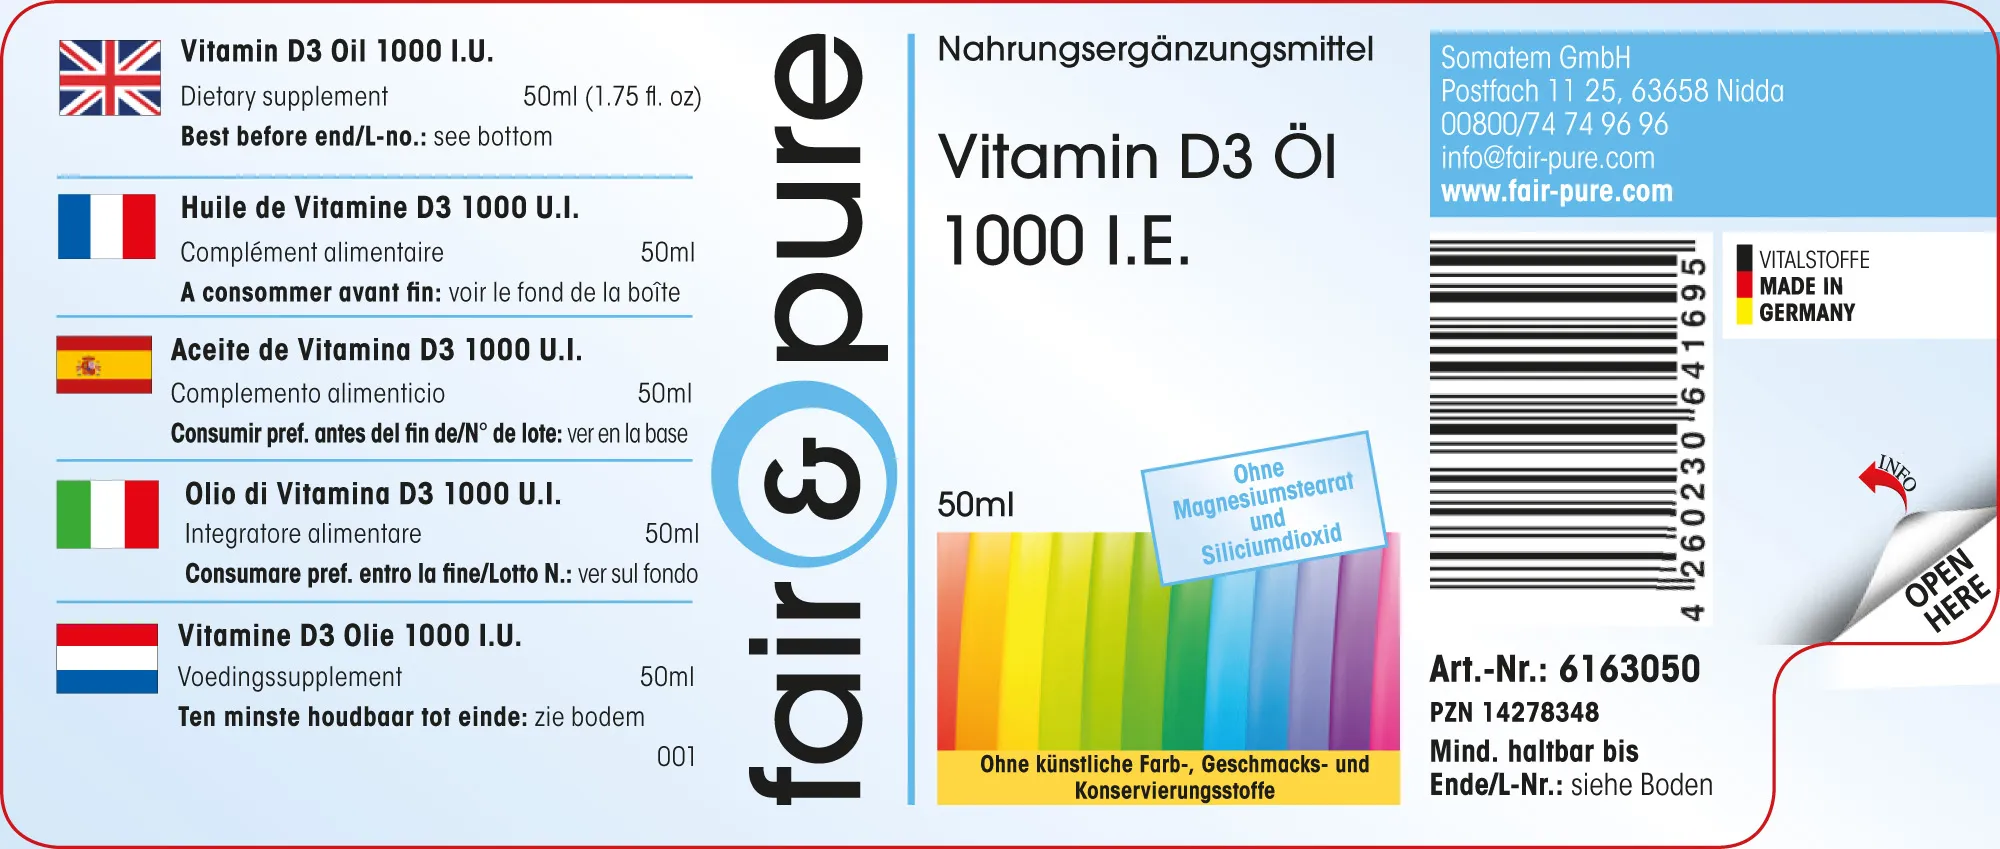 Vitamin D3 flüssig 1000 I.E